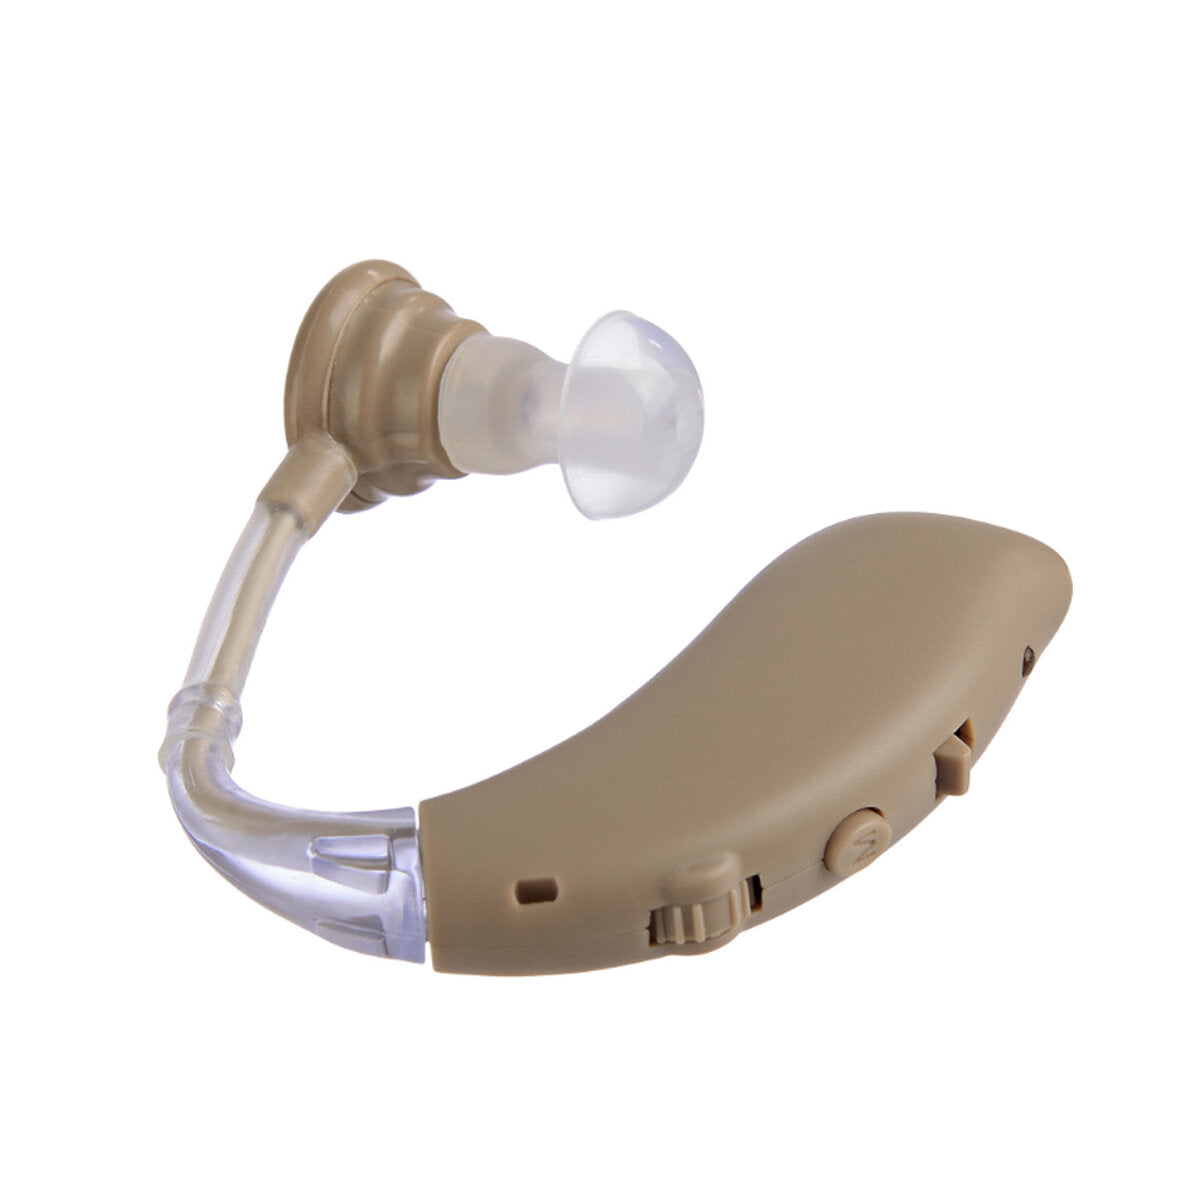 The Z1 Wireless Digital Bluetooth Hearing Aid